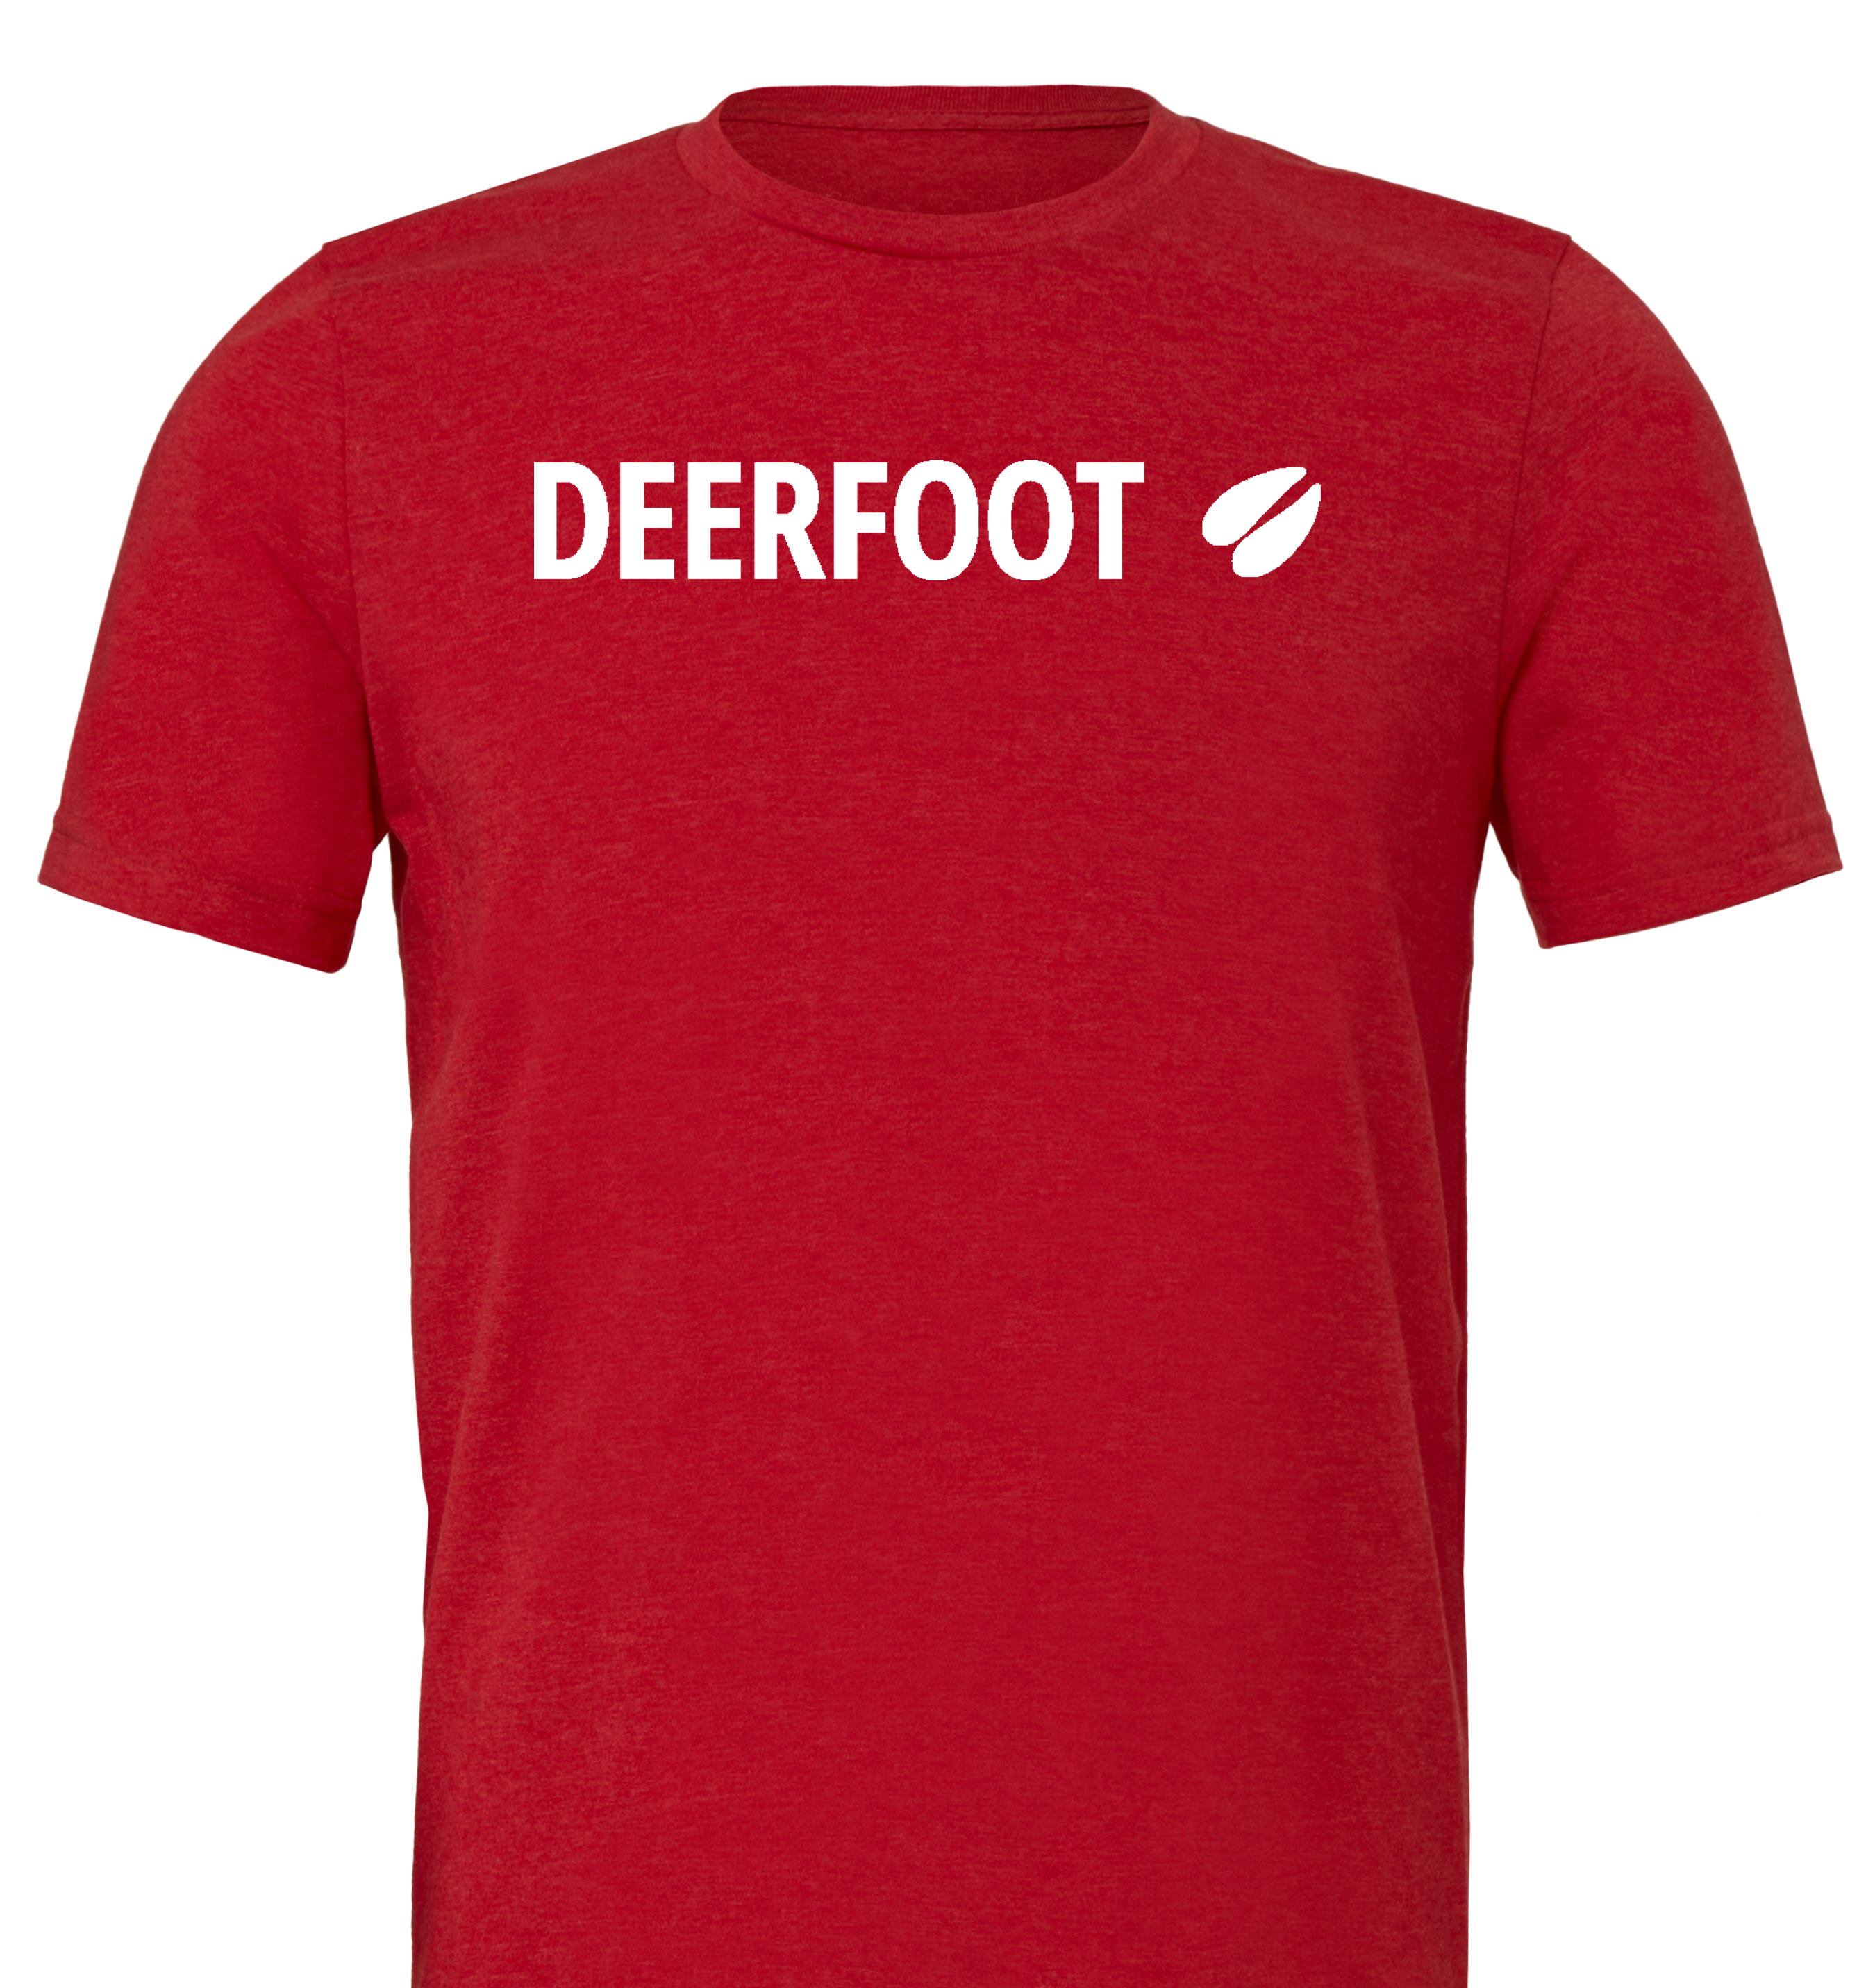 Deerfoot Logo on Red Shirt